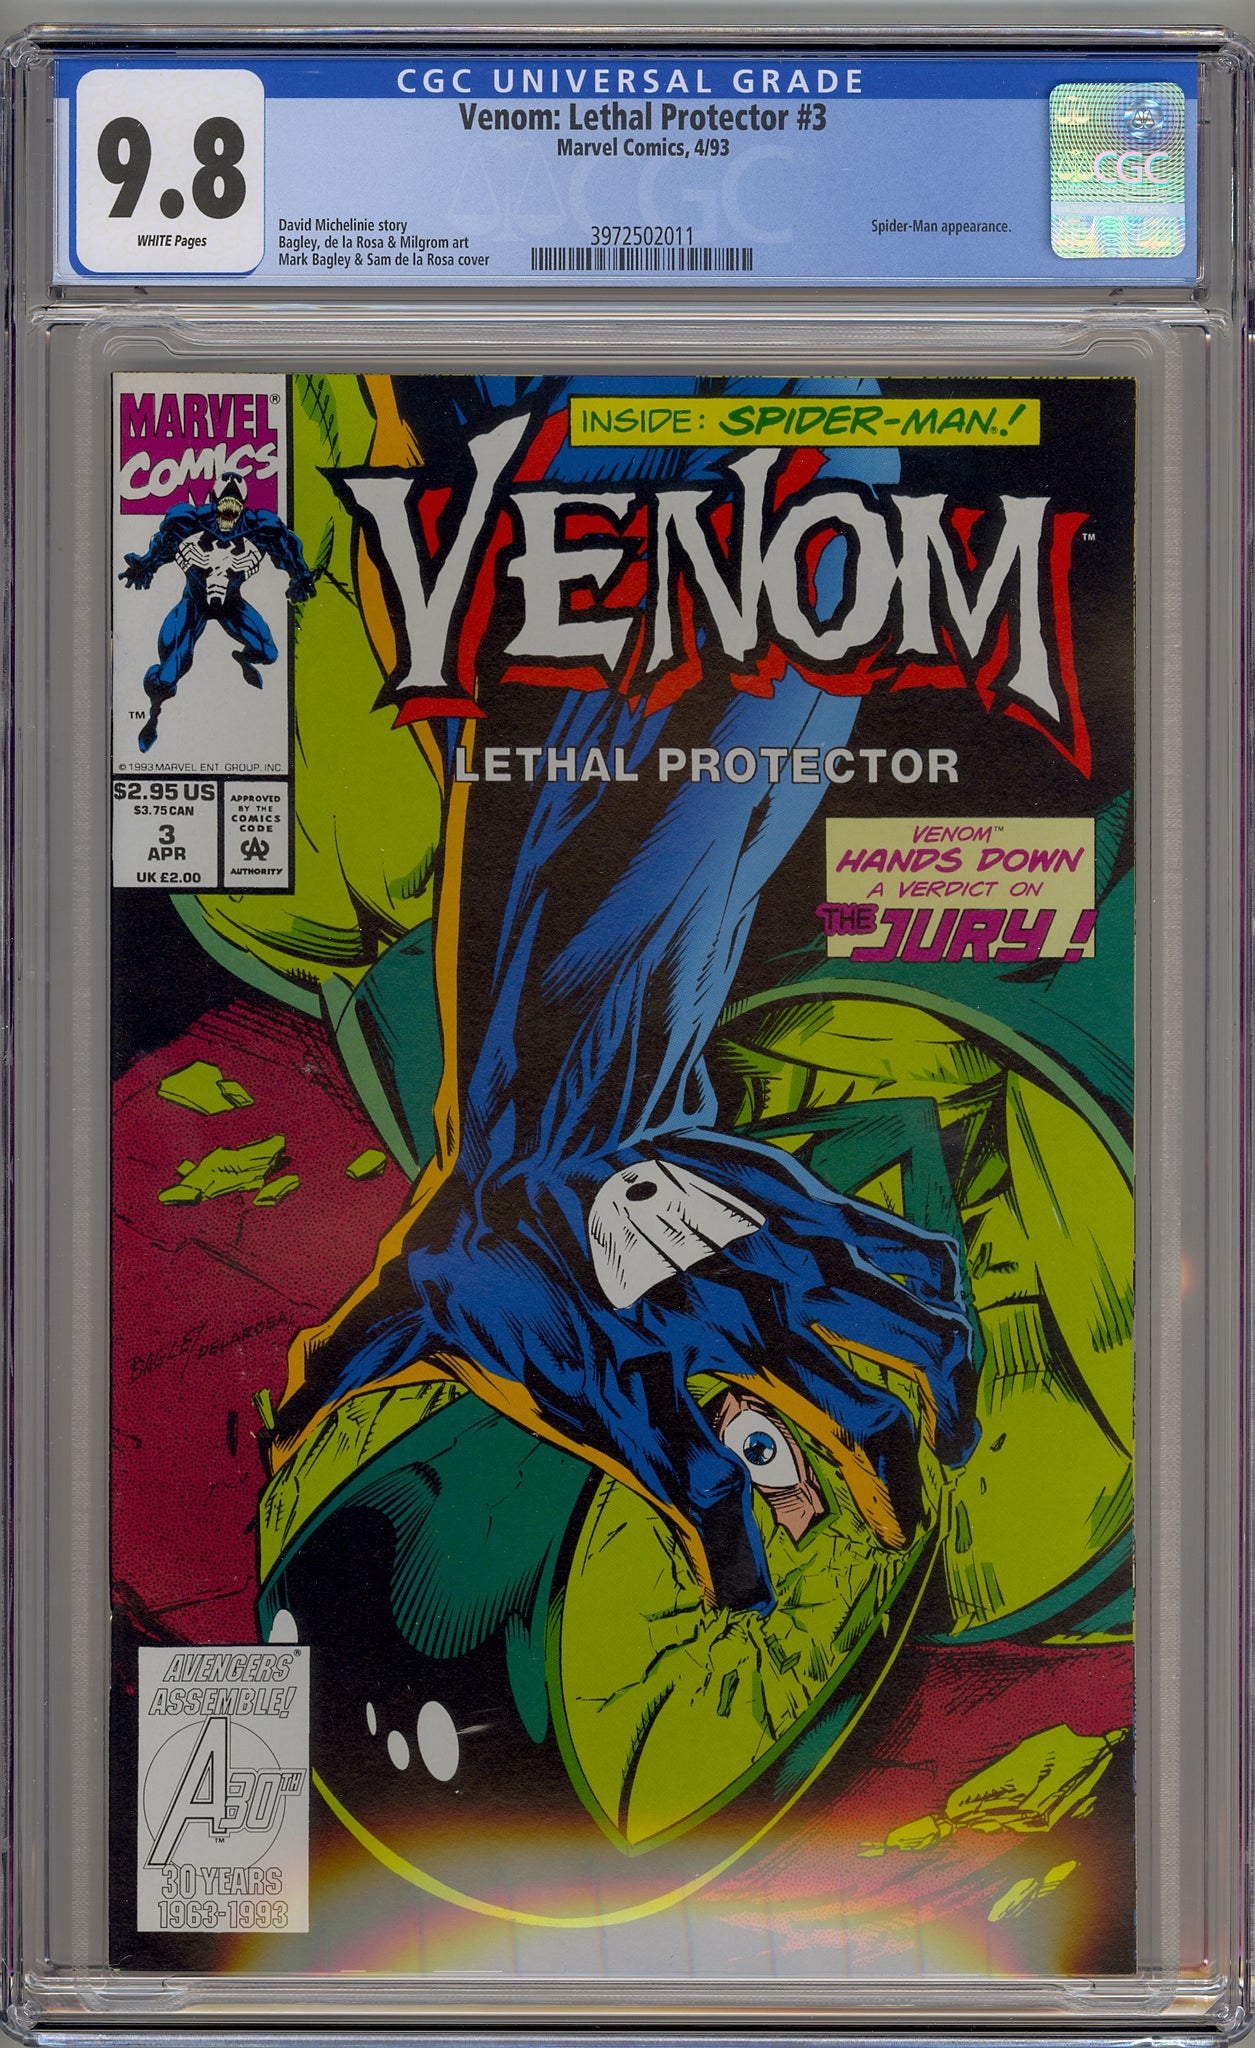 Venom Lethal Protector #3 (1993) Spider-Man